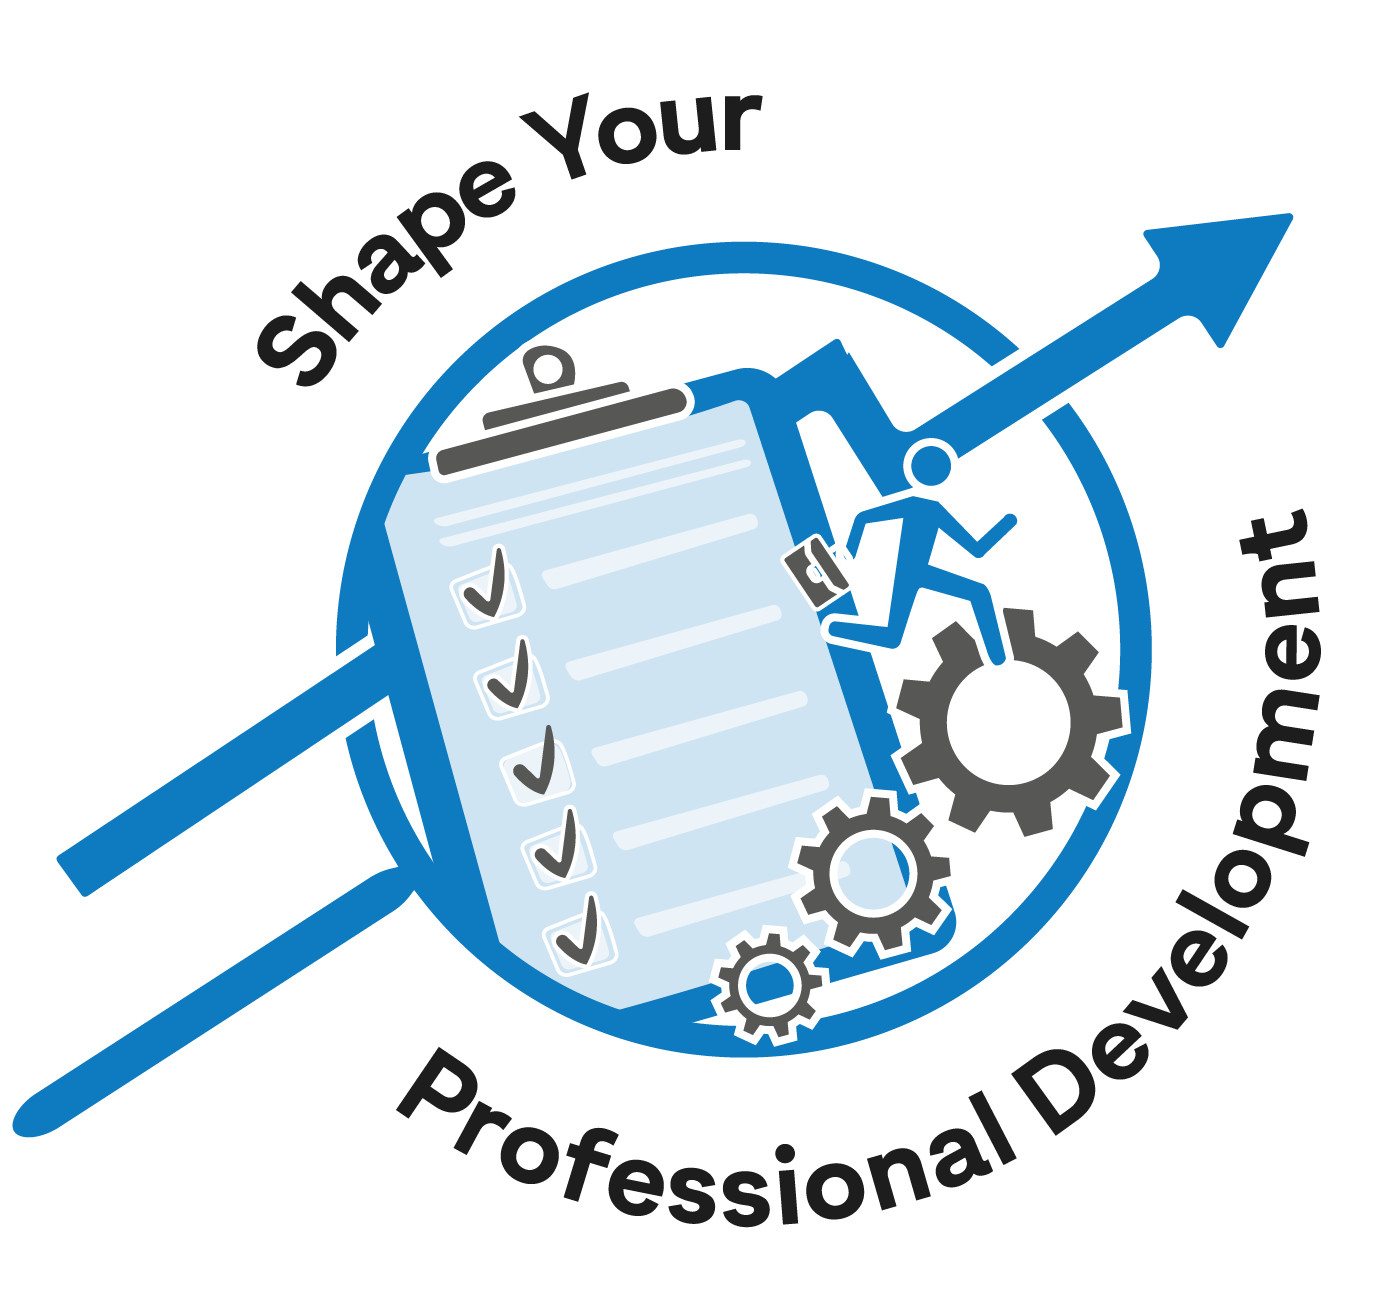 Shape your professional development